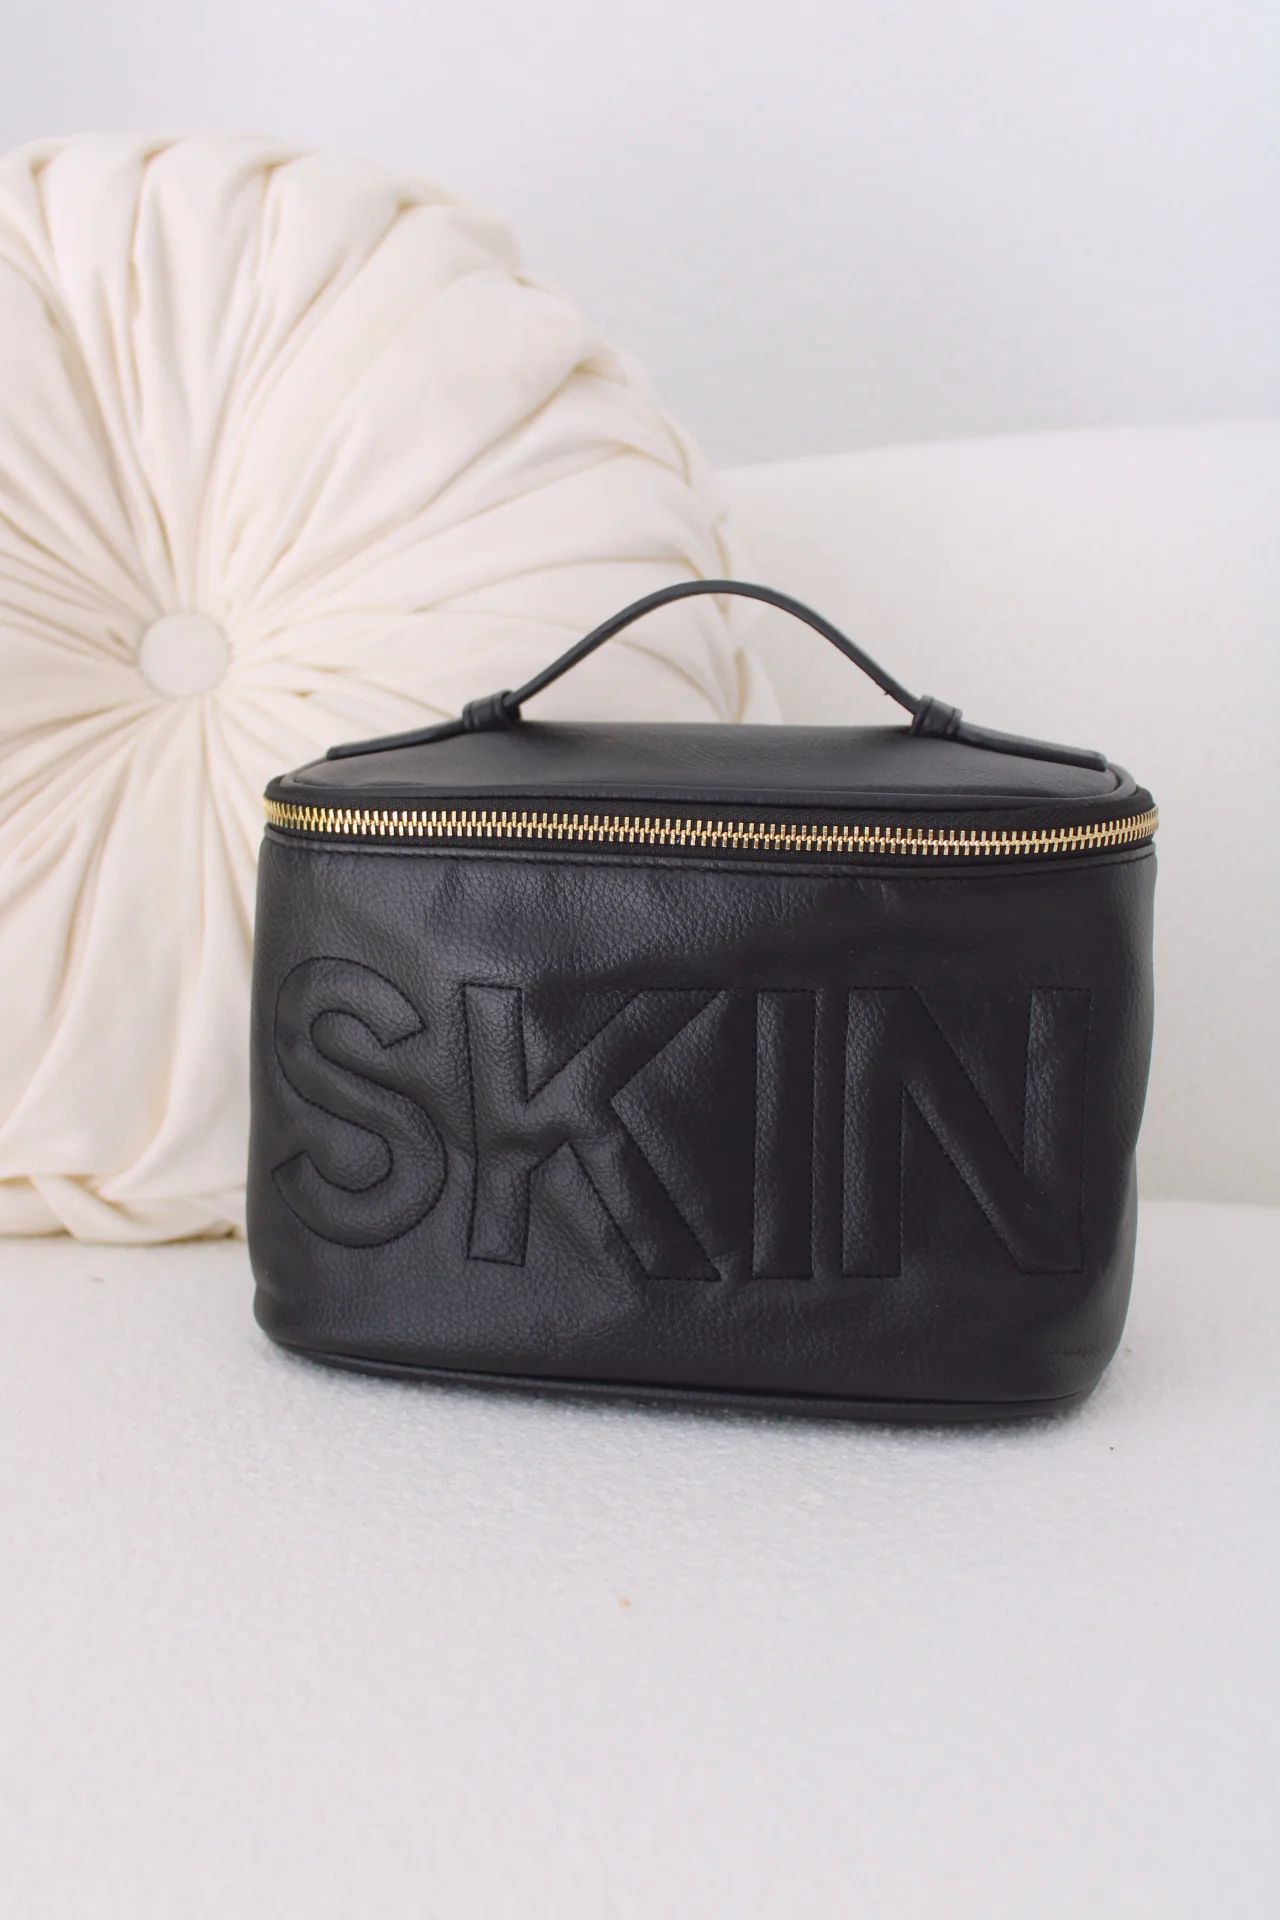 Skin - Black Leather Open Top | KenzKustomz